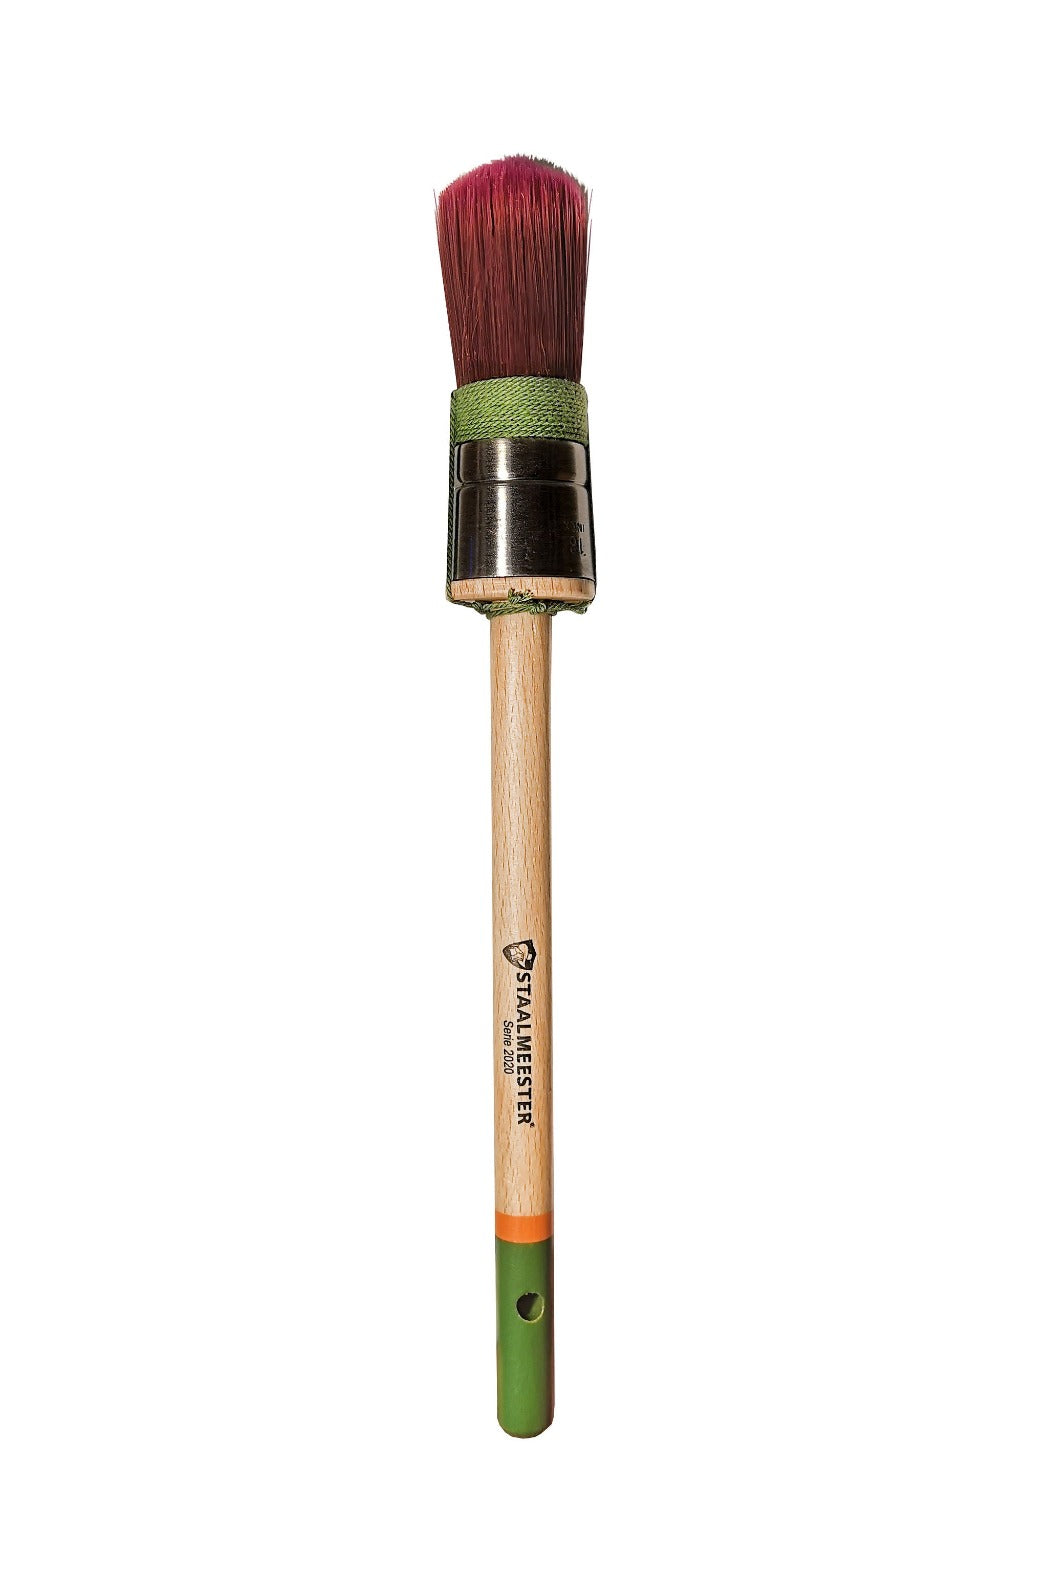 Round Paintbrush 2020 - Staalmeester - No 12, 14, 16, 18, 20